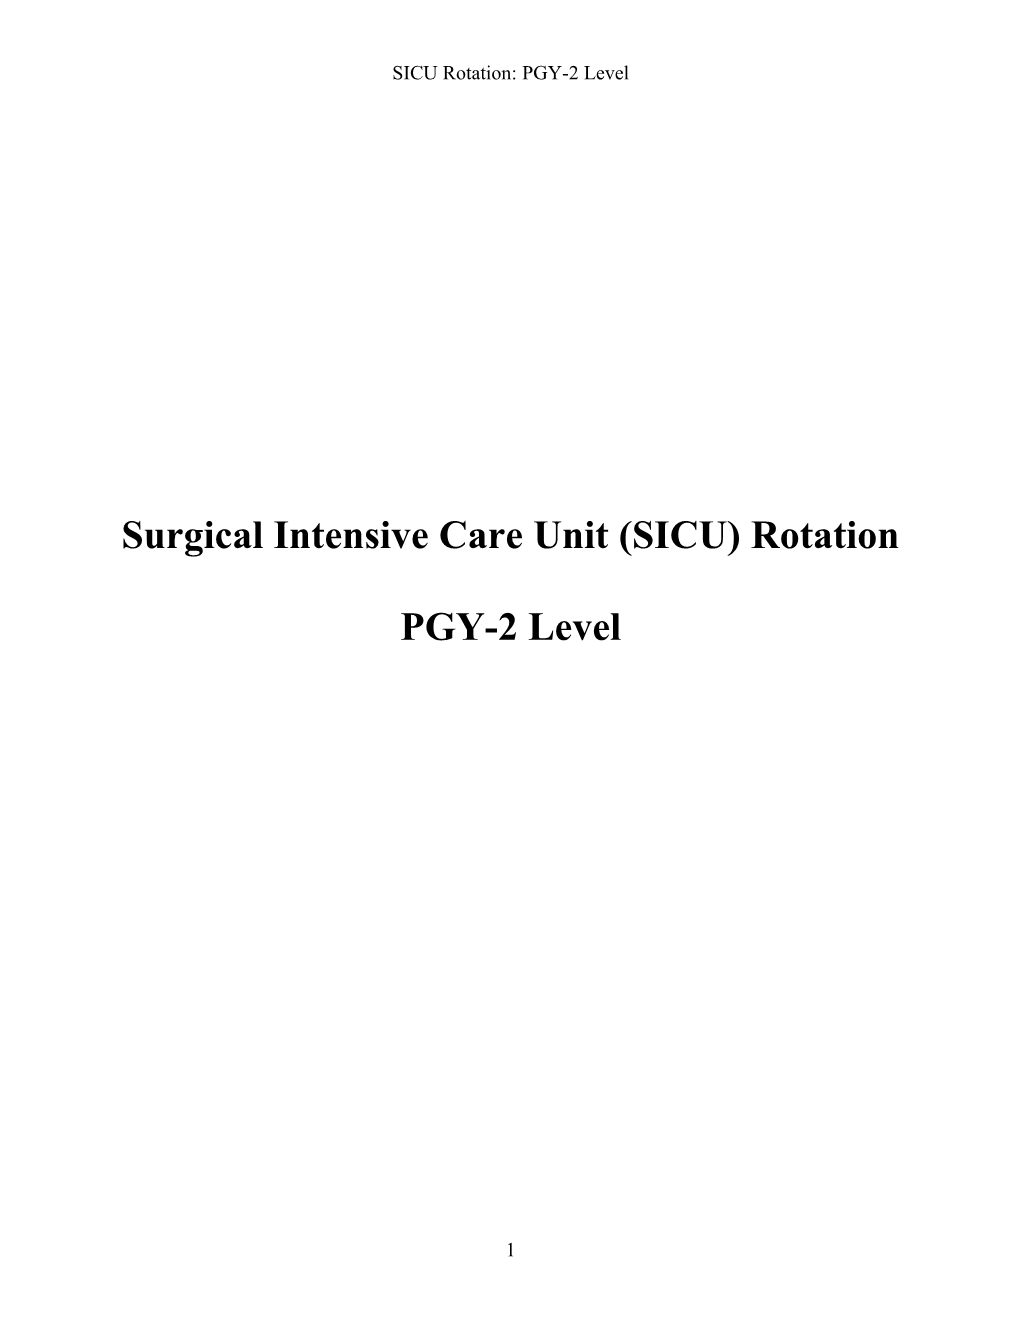 Surgical Intensive Care Unit (SICU) Rotation